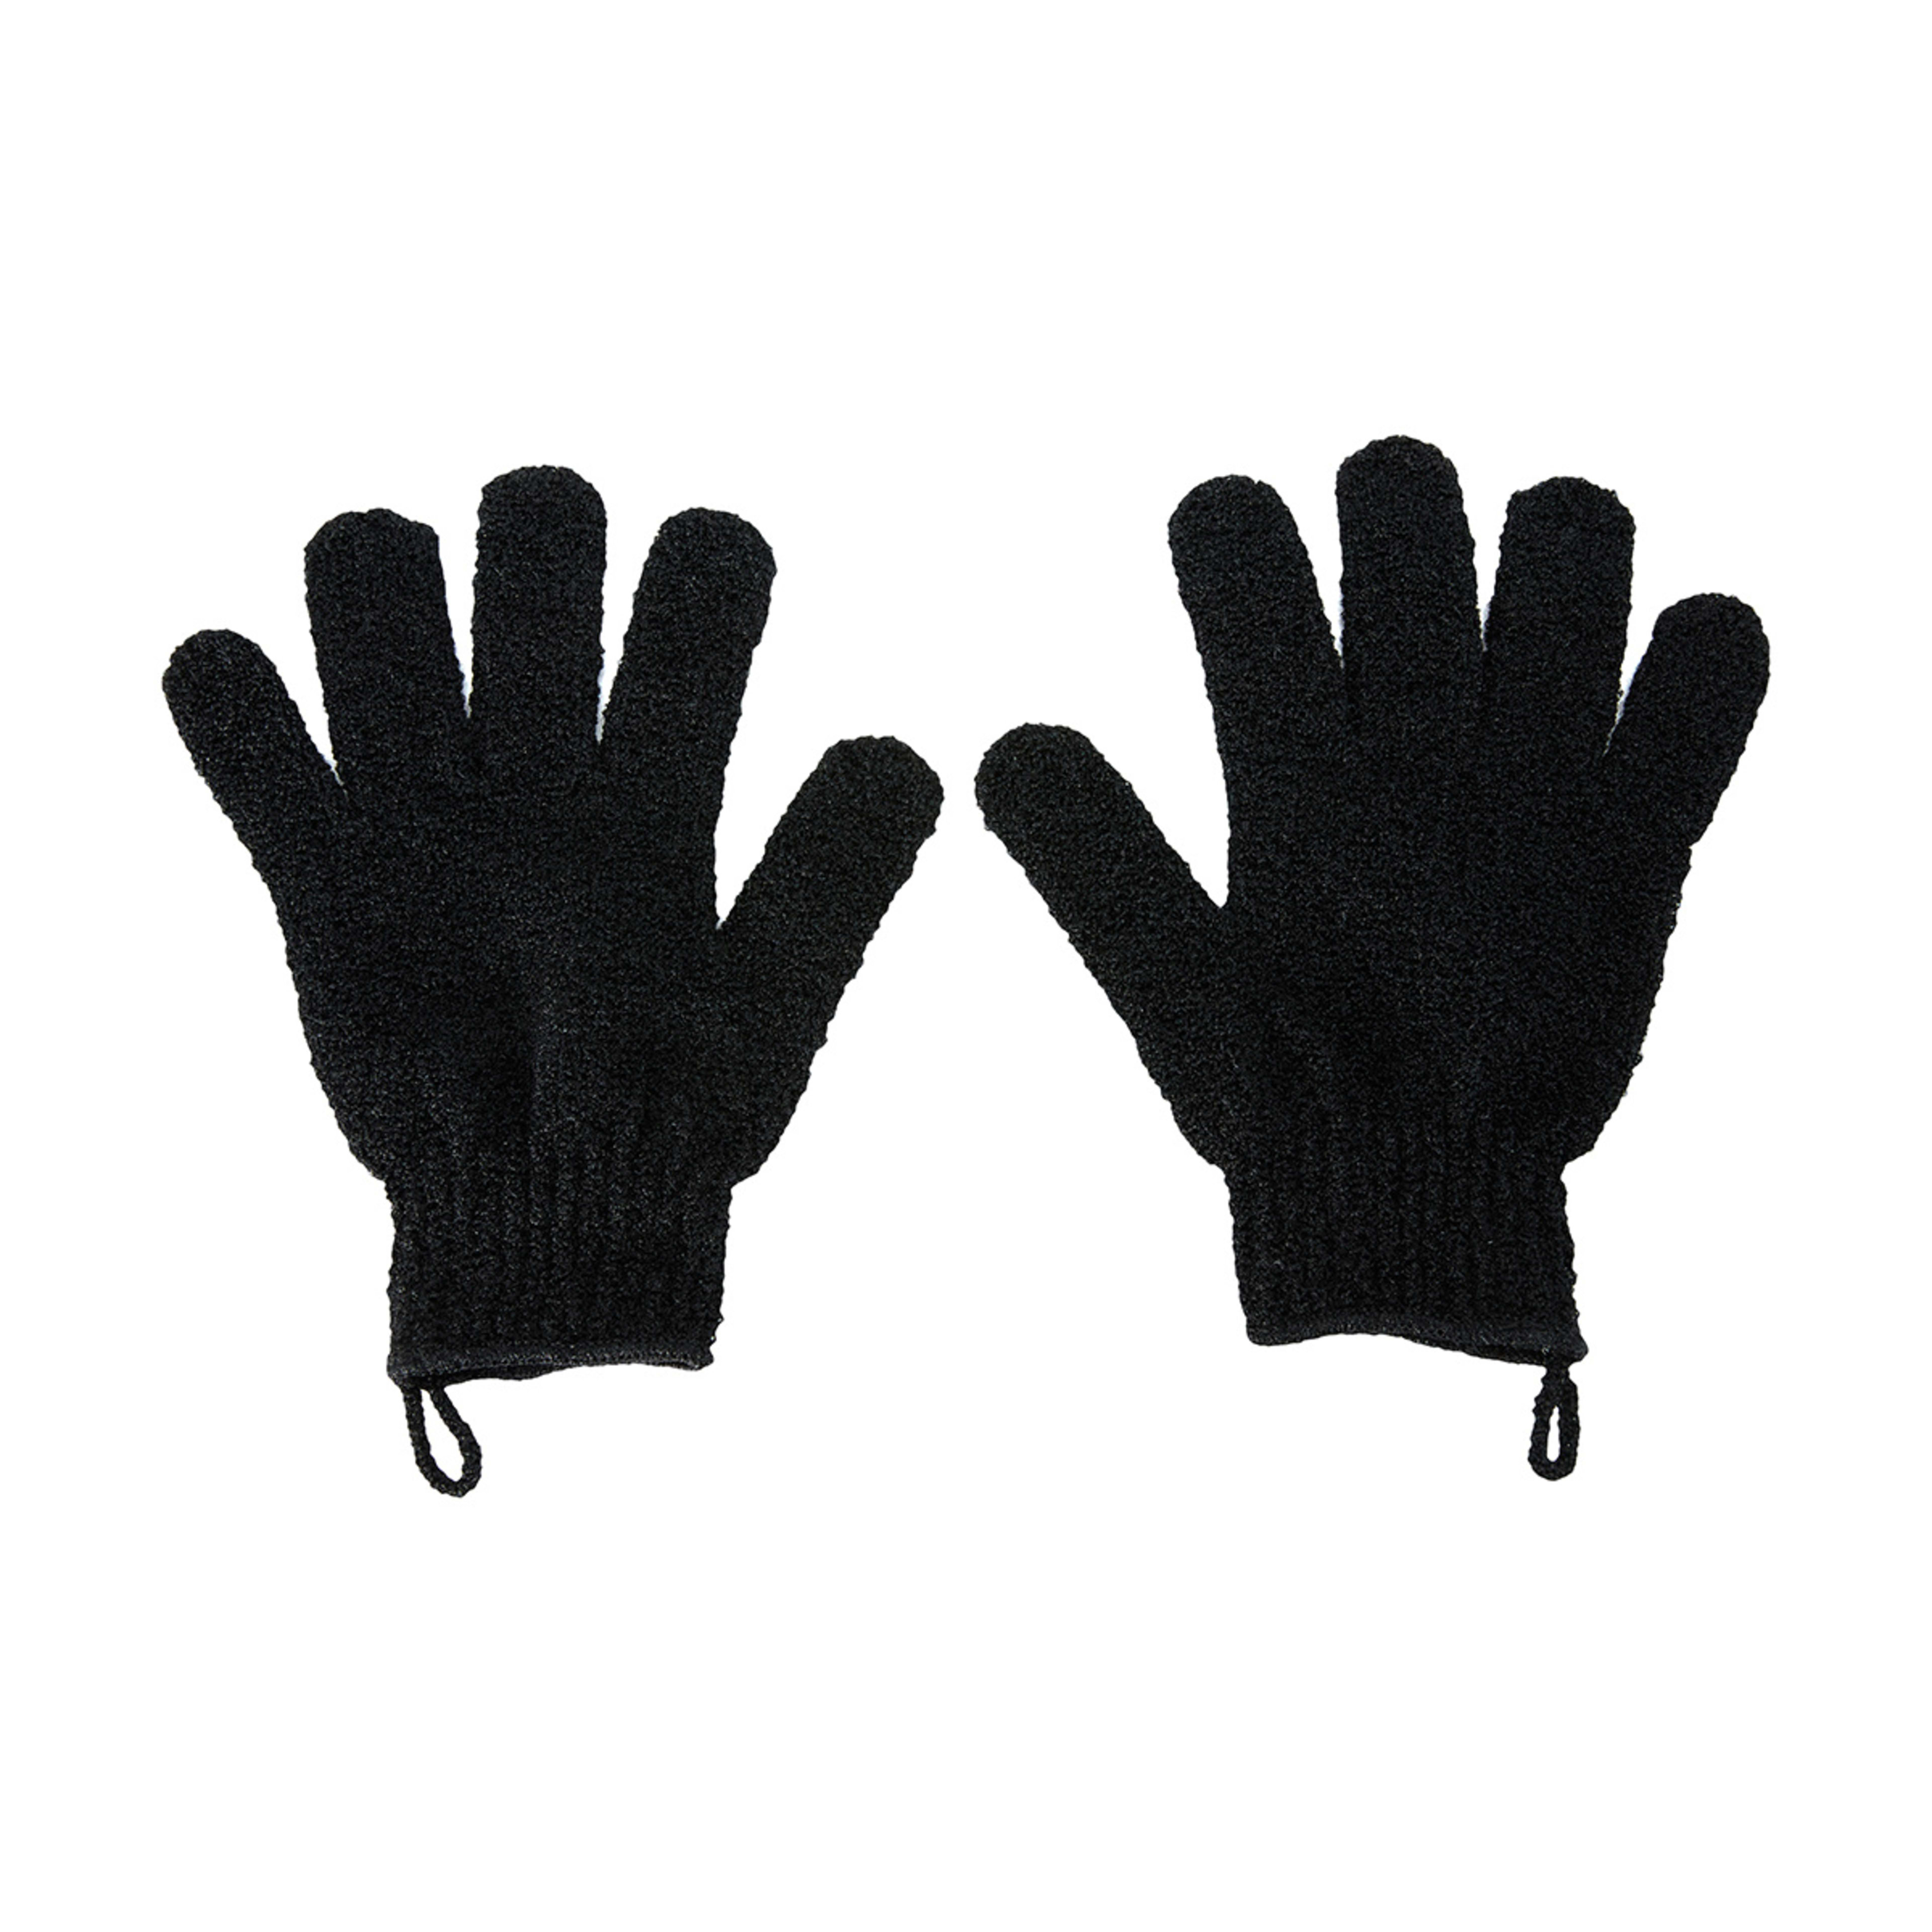 Exfoliating Glove - Black